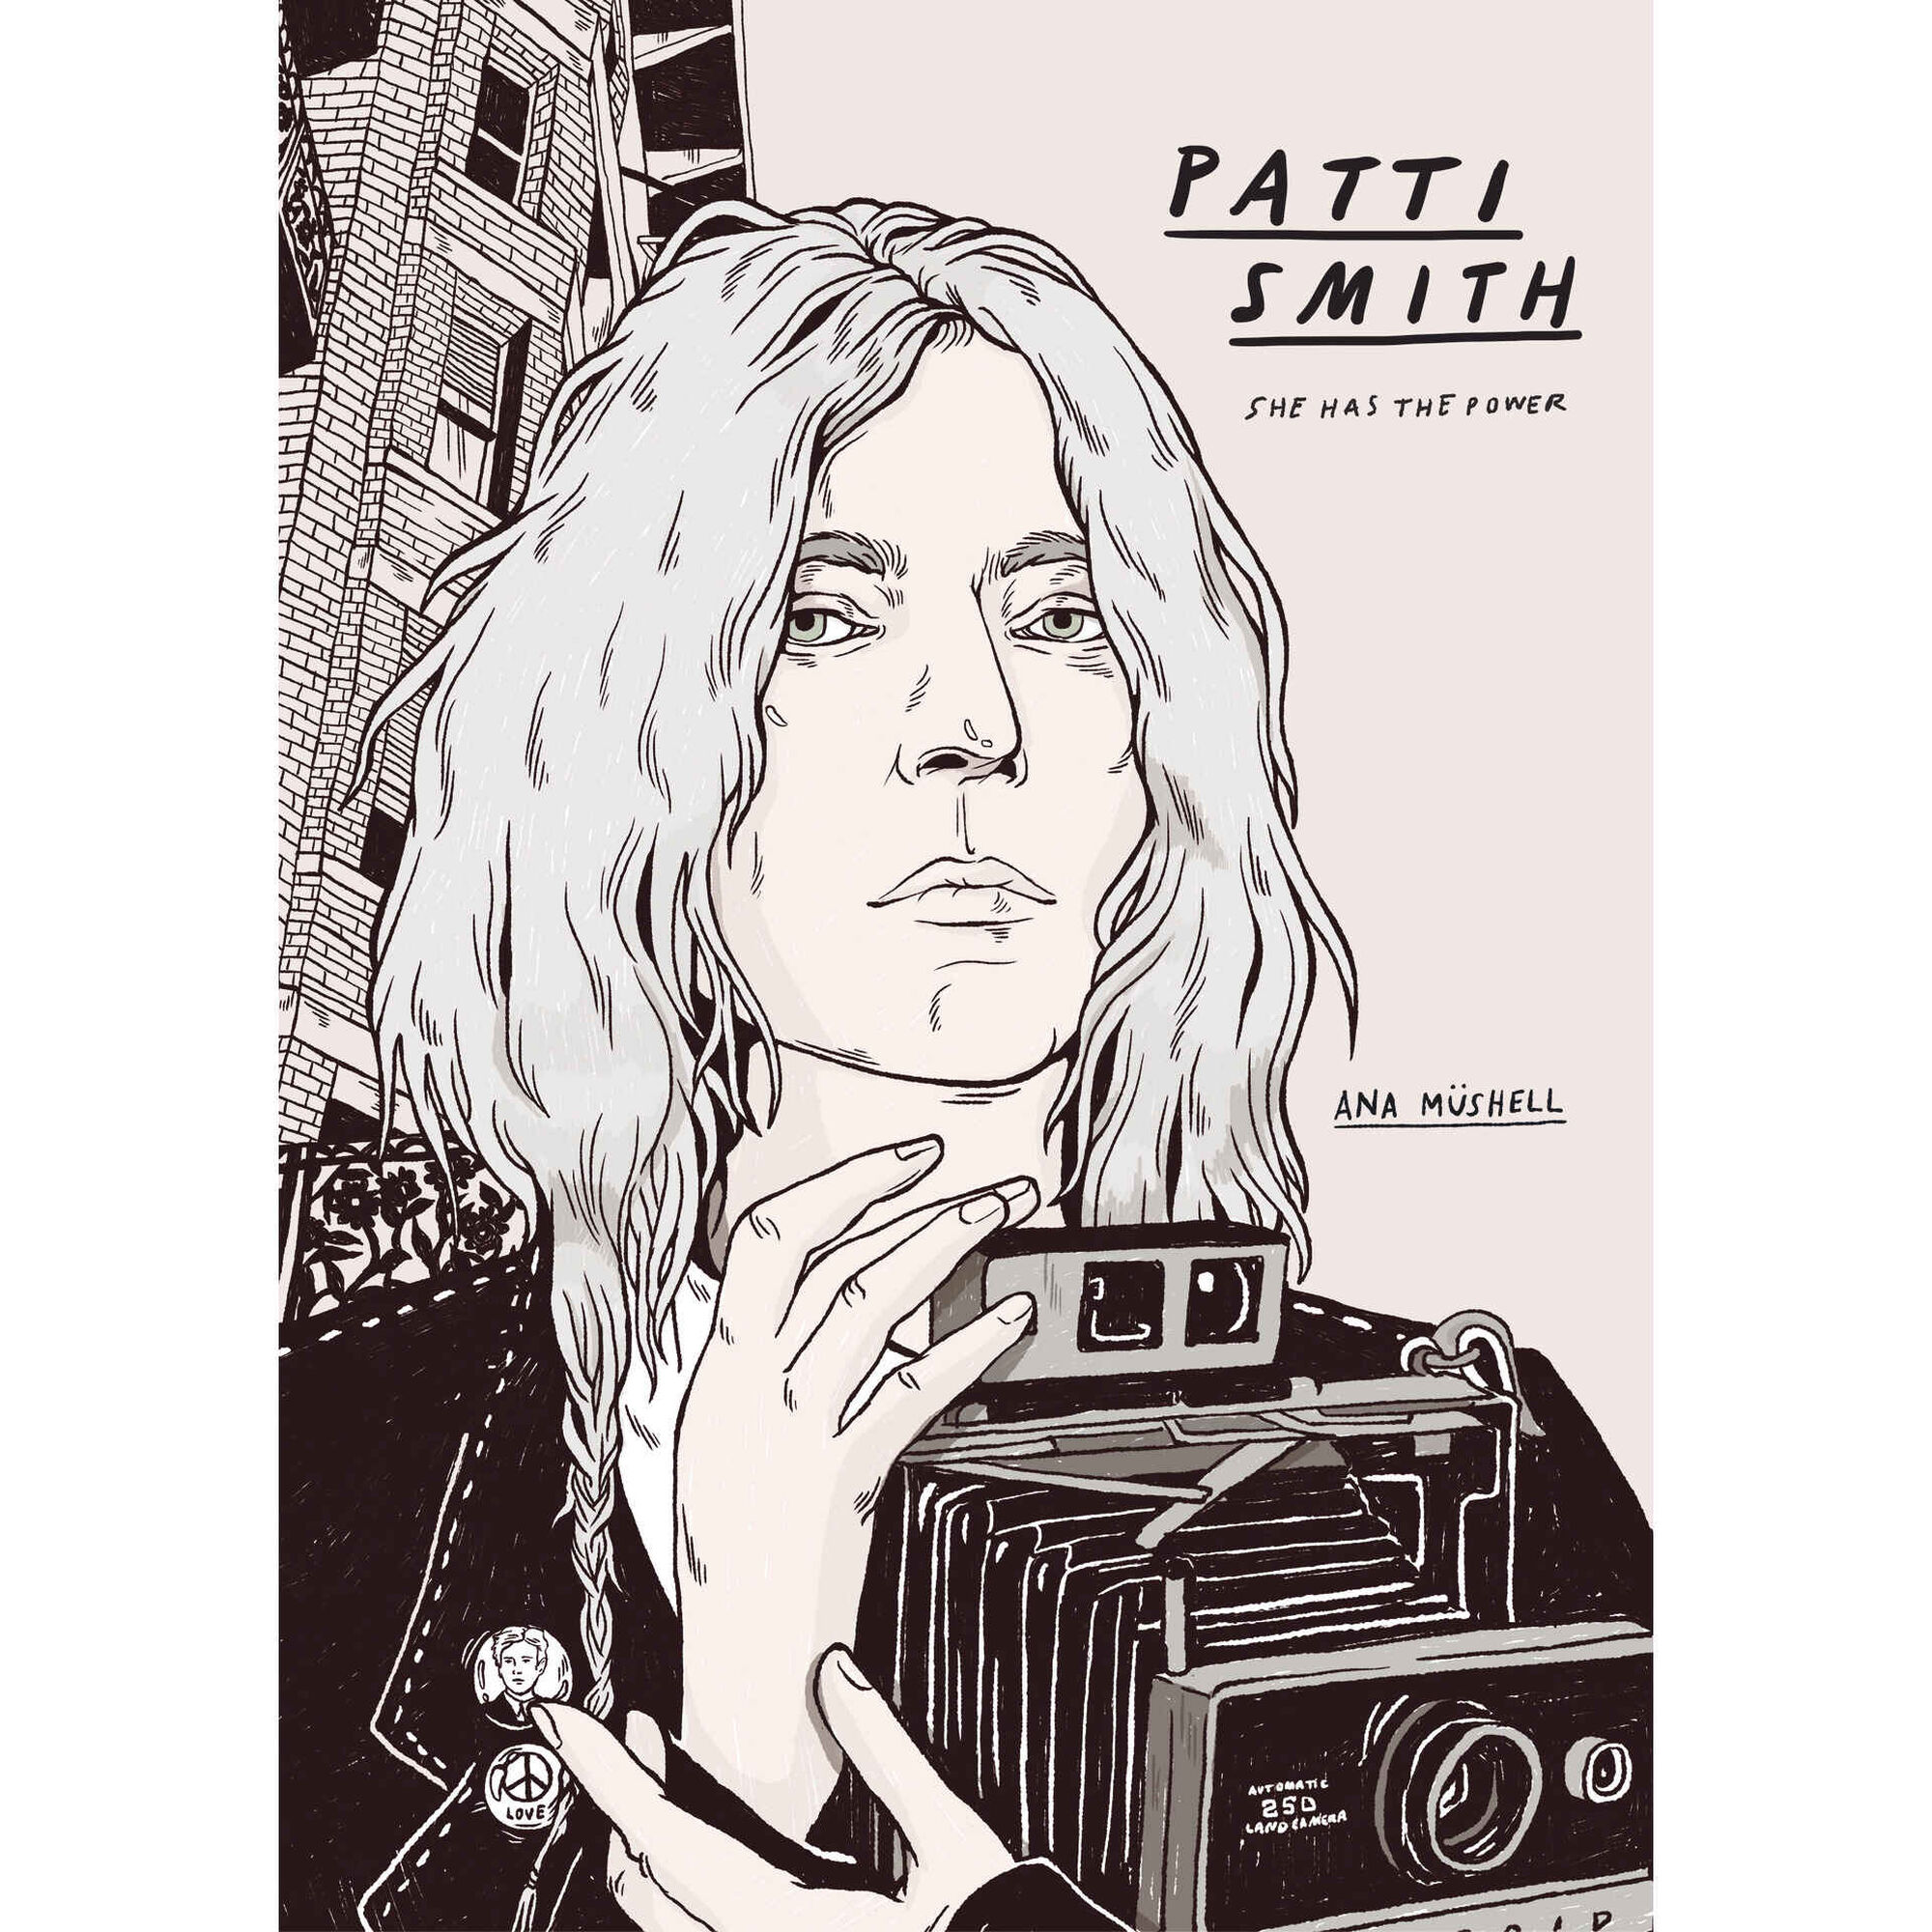 Patti Smith - She Has The Power